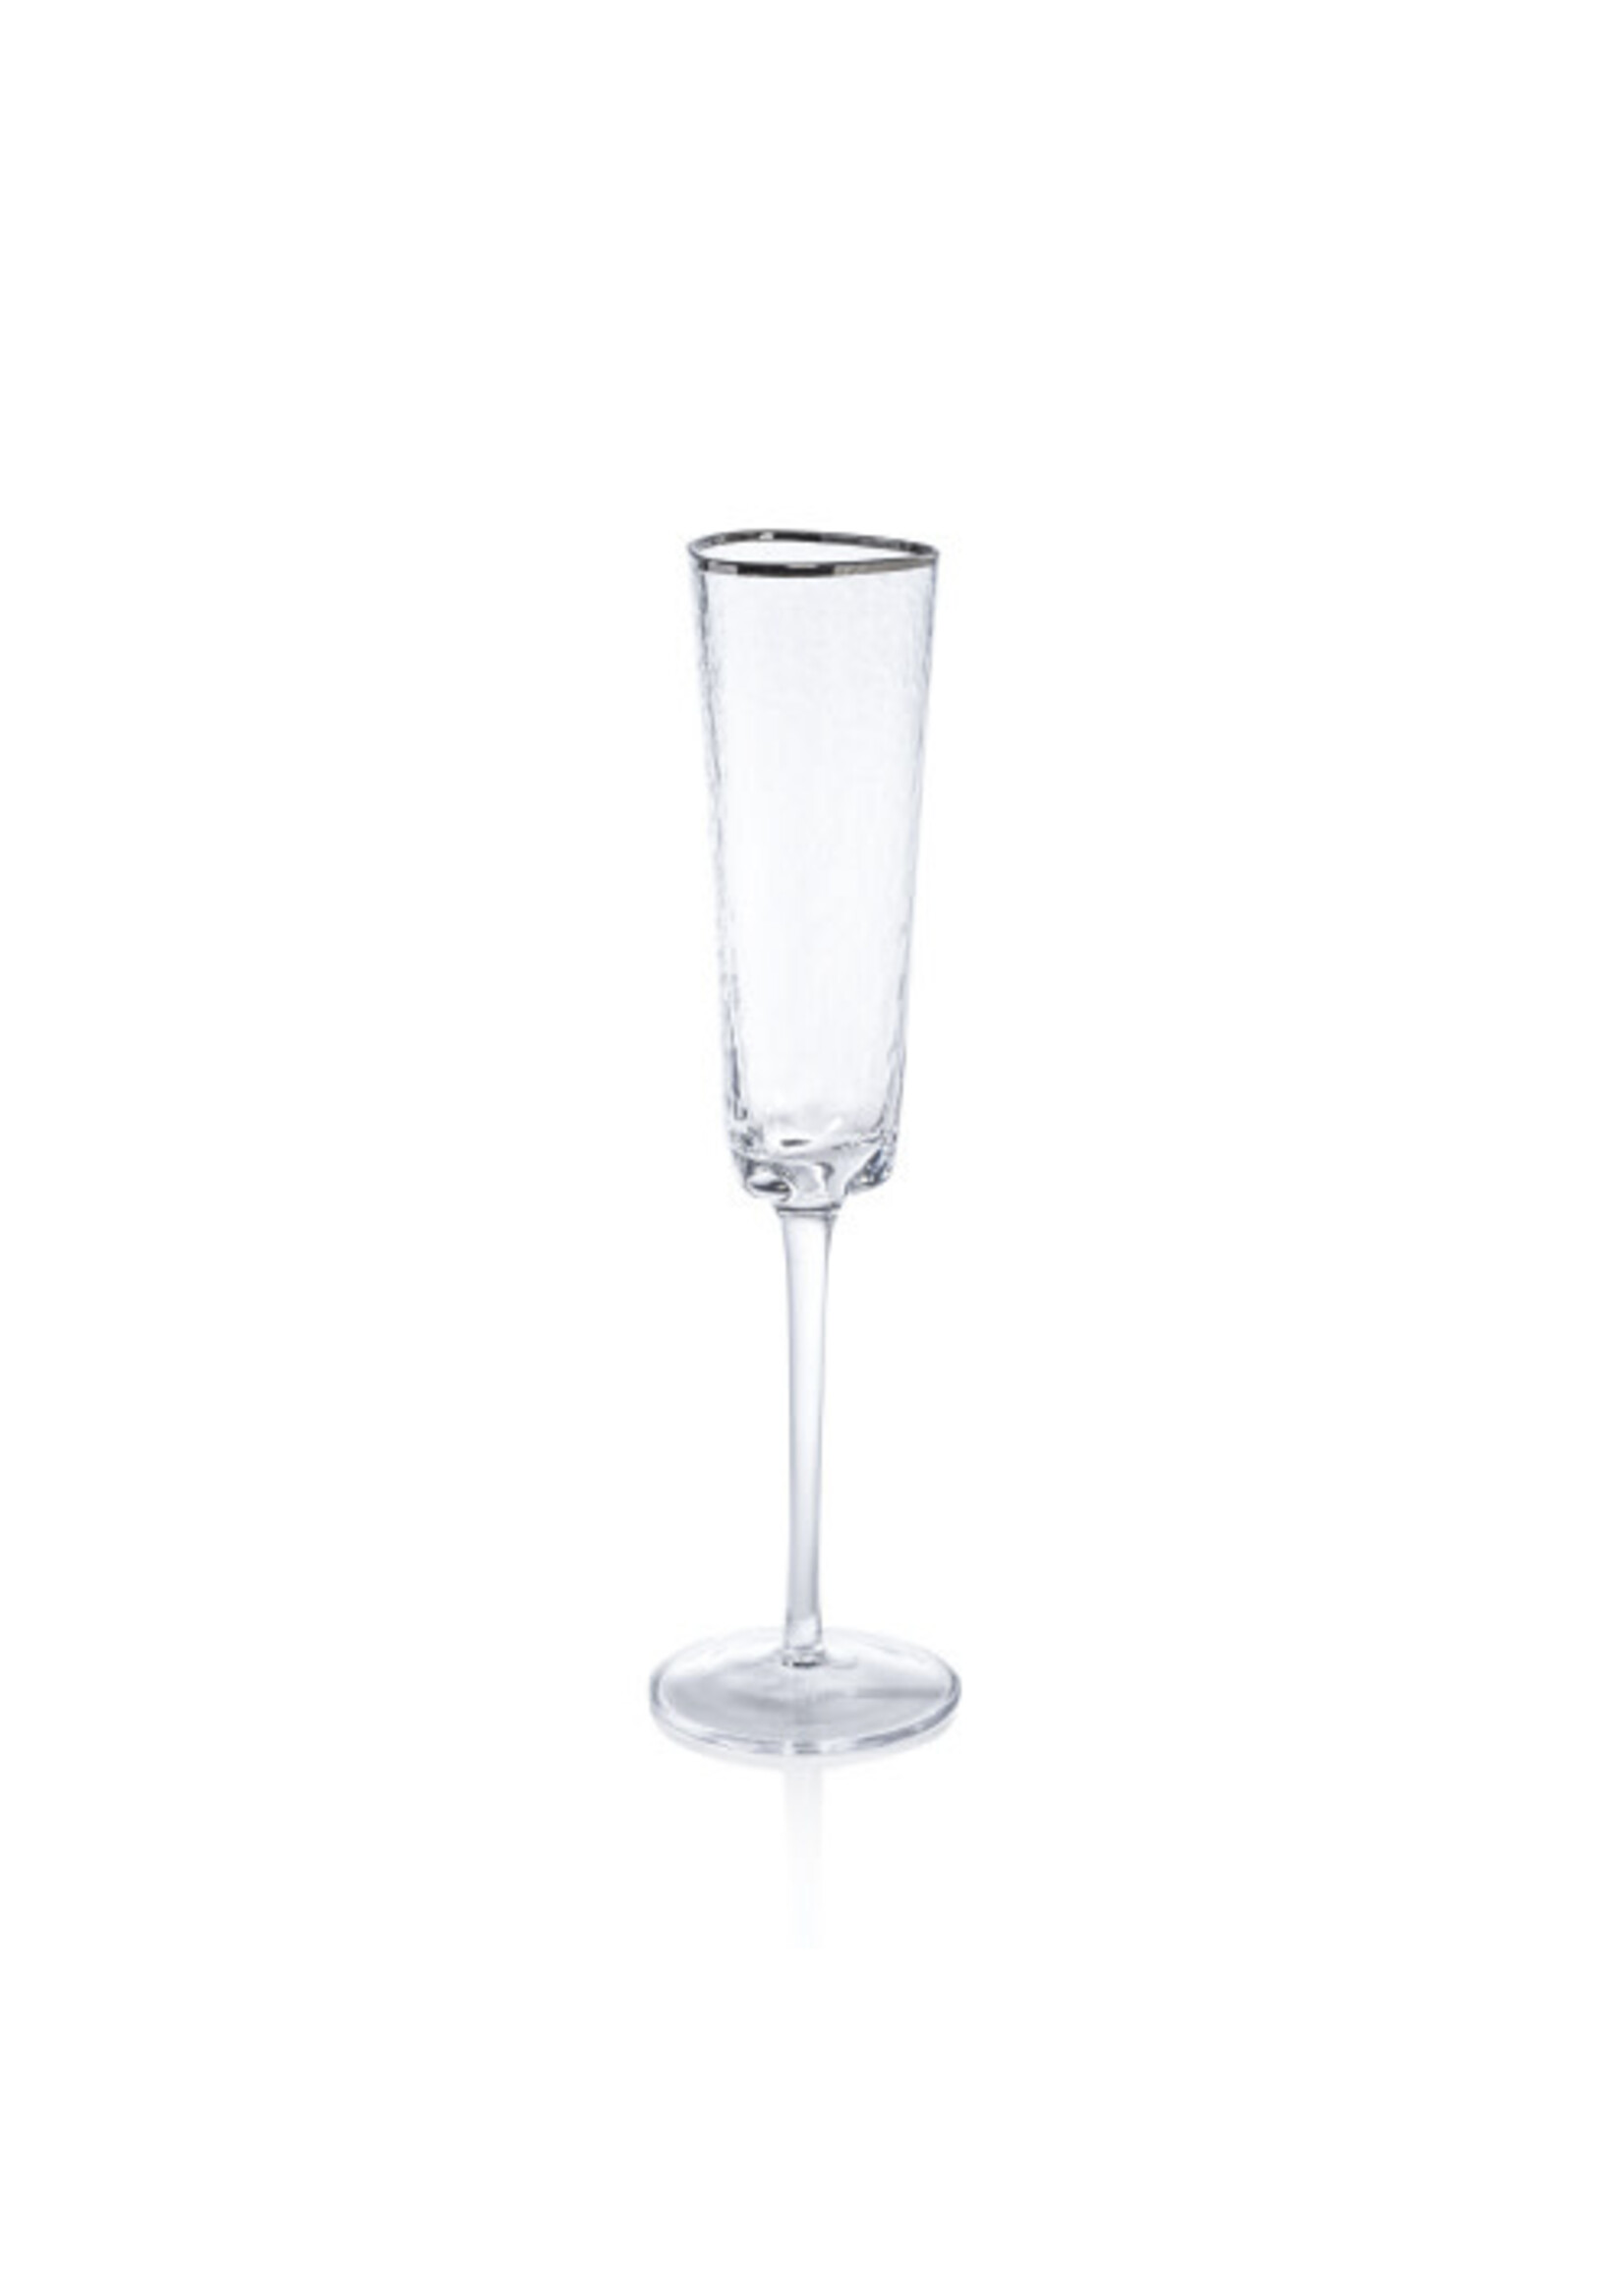 Zodax Aperitivo Triangular Champagne Flute, Clear with Platinum Rim